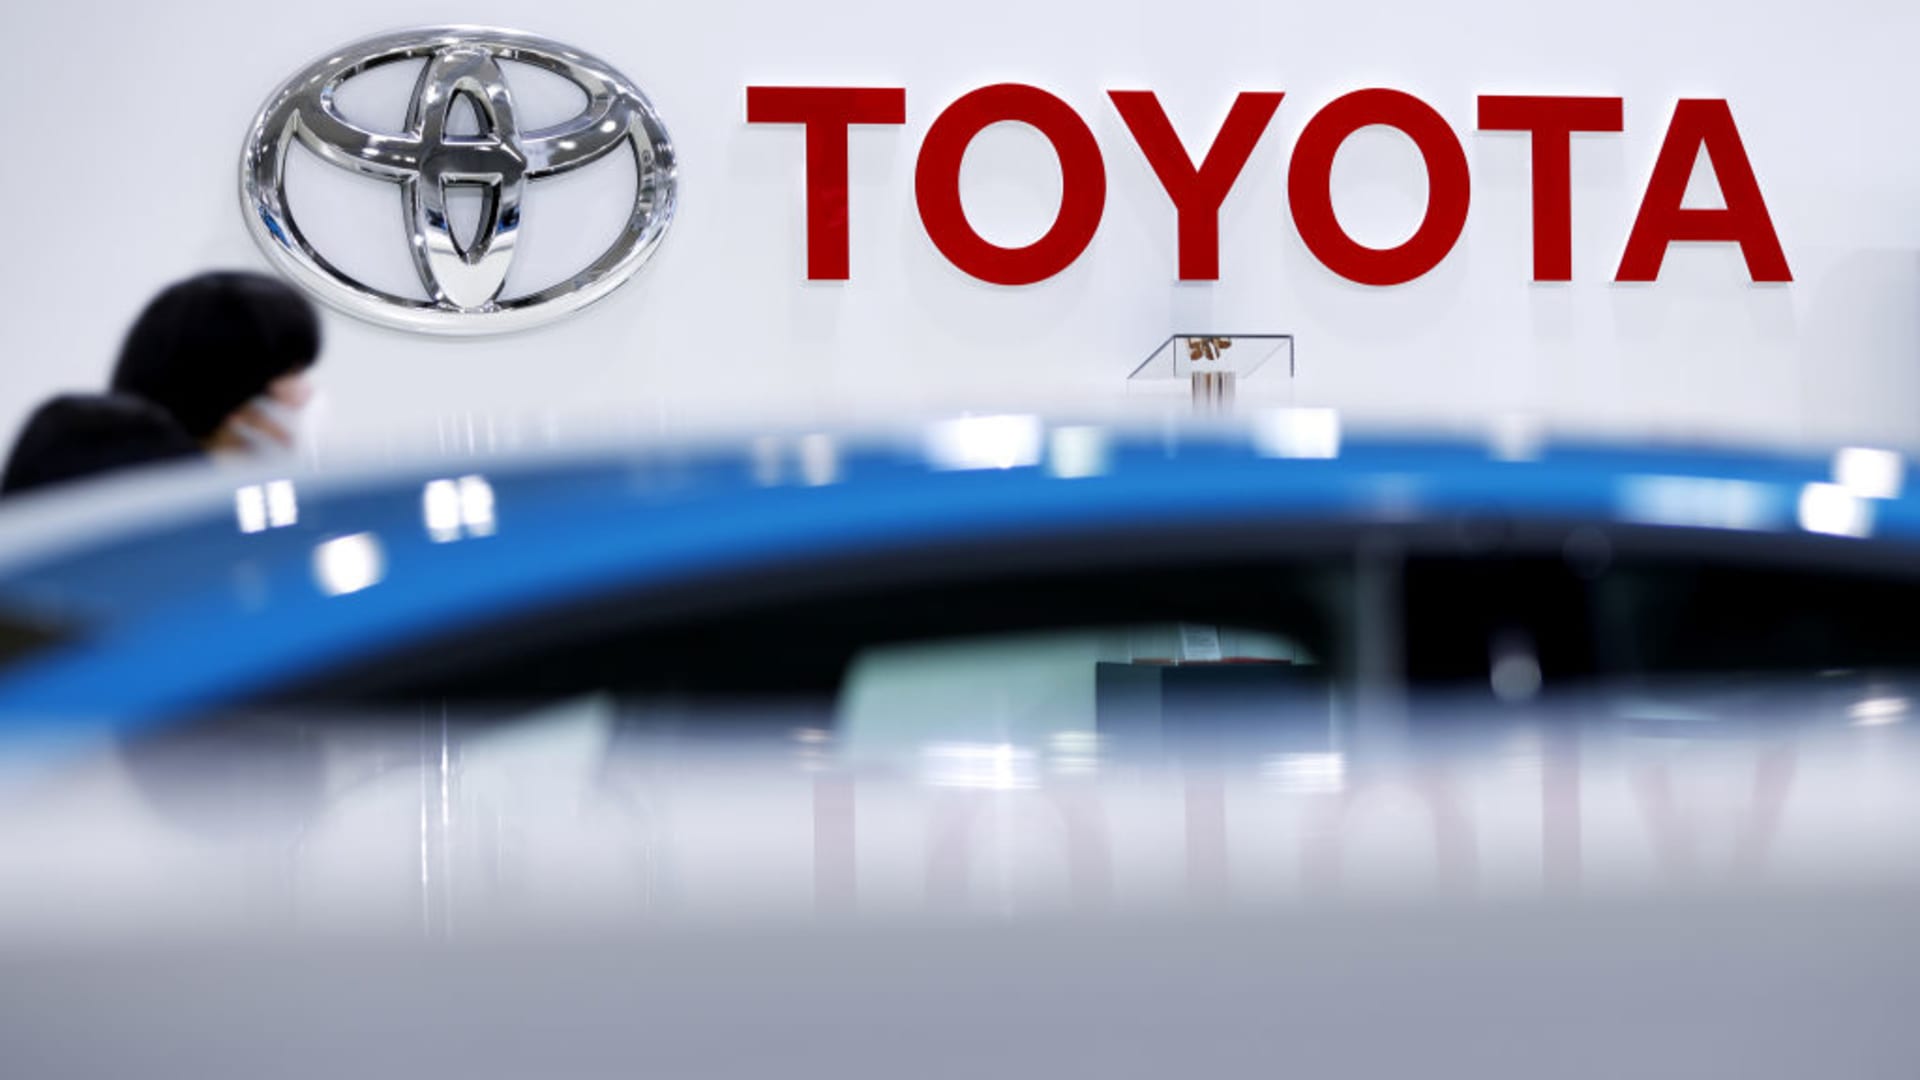 Toyota, Aurora test-drive autonomous ride-hailing fleet in Texas